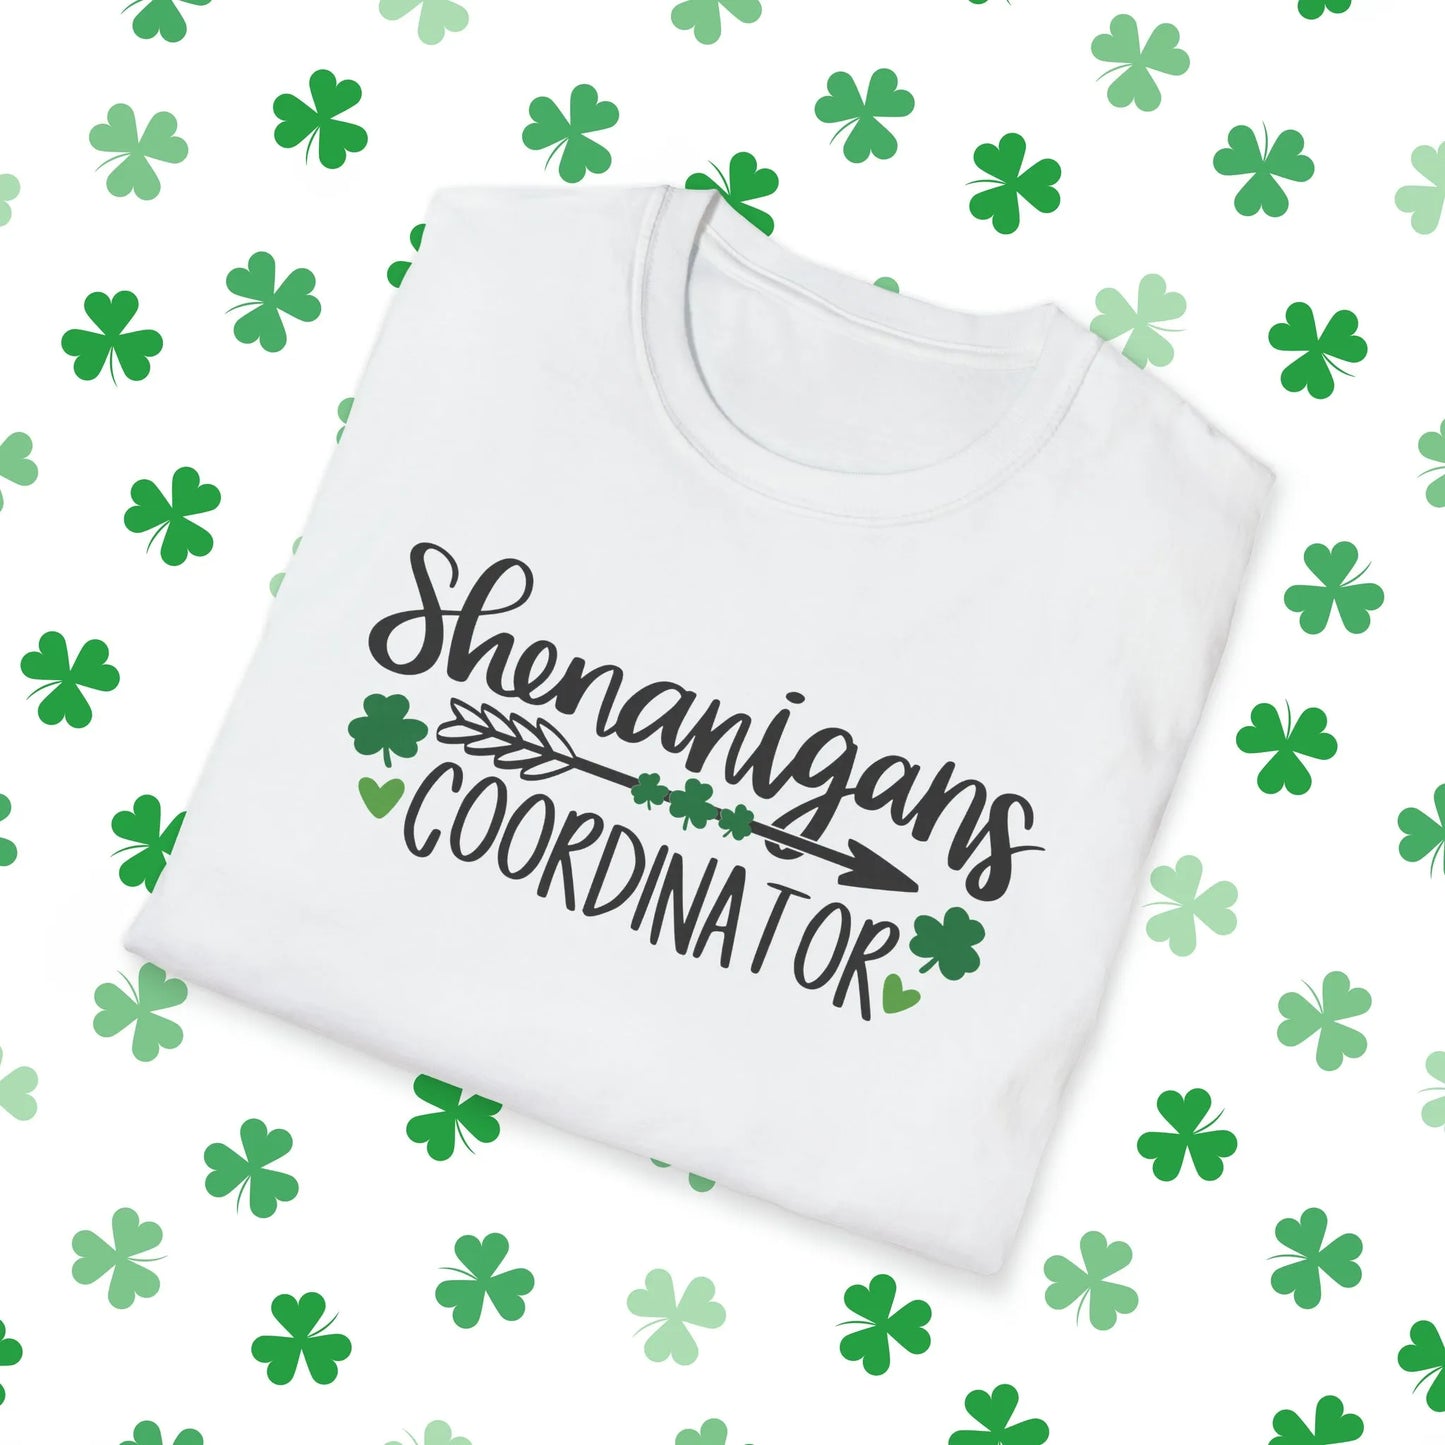 Shenanigans Coordinator St. Patrick's Day T-Shirt - Comfort & Charm - Shenanigans Coordinator Shirt White Folded